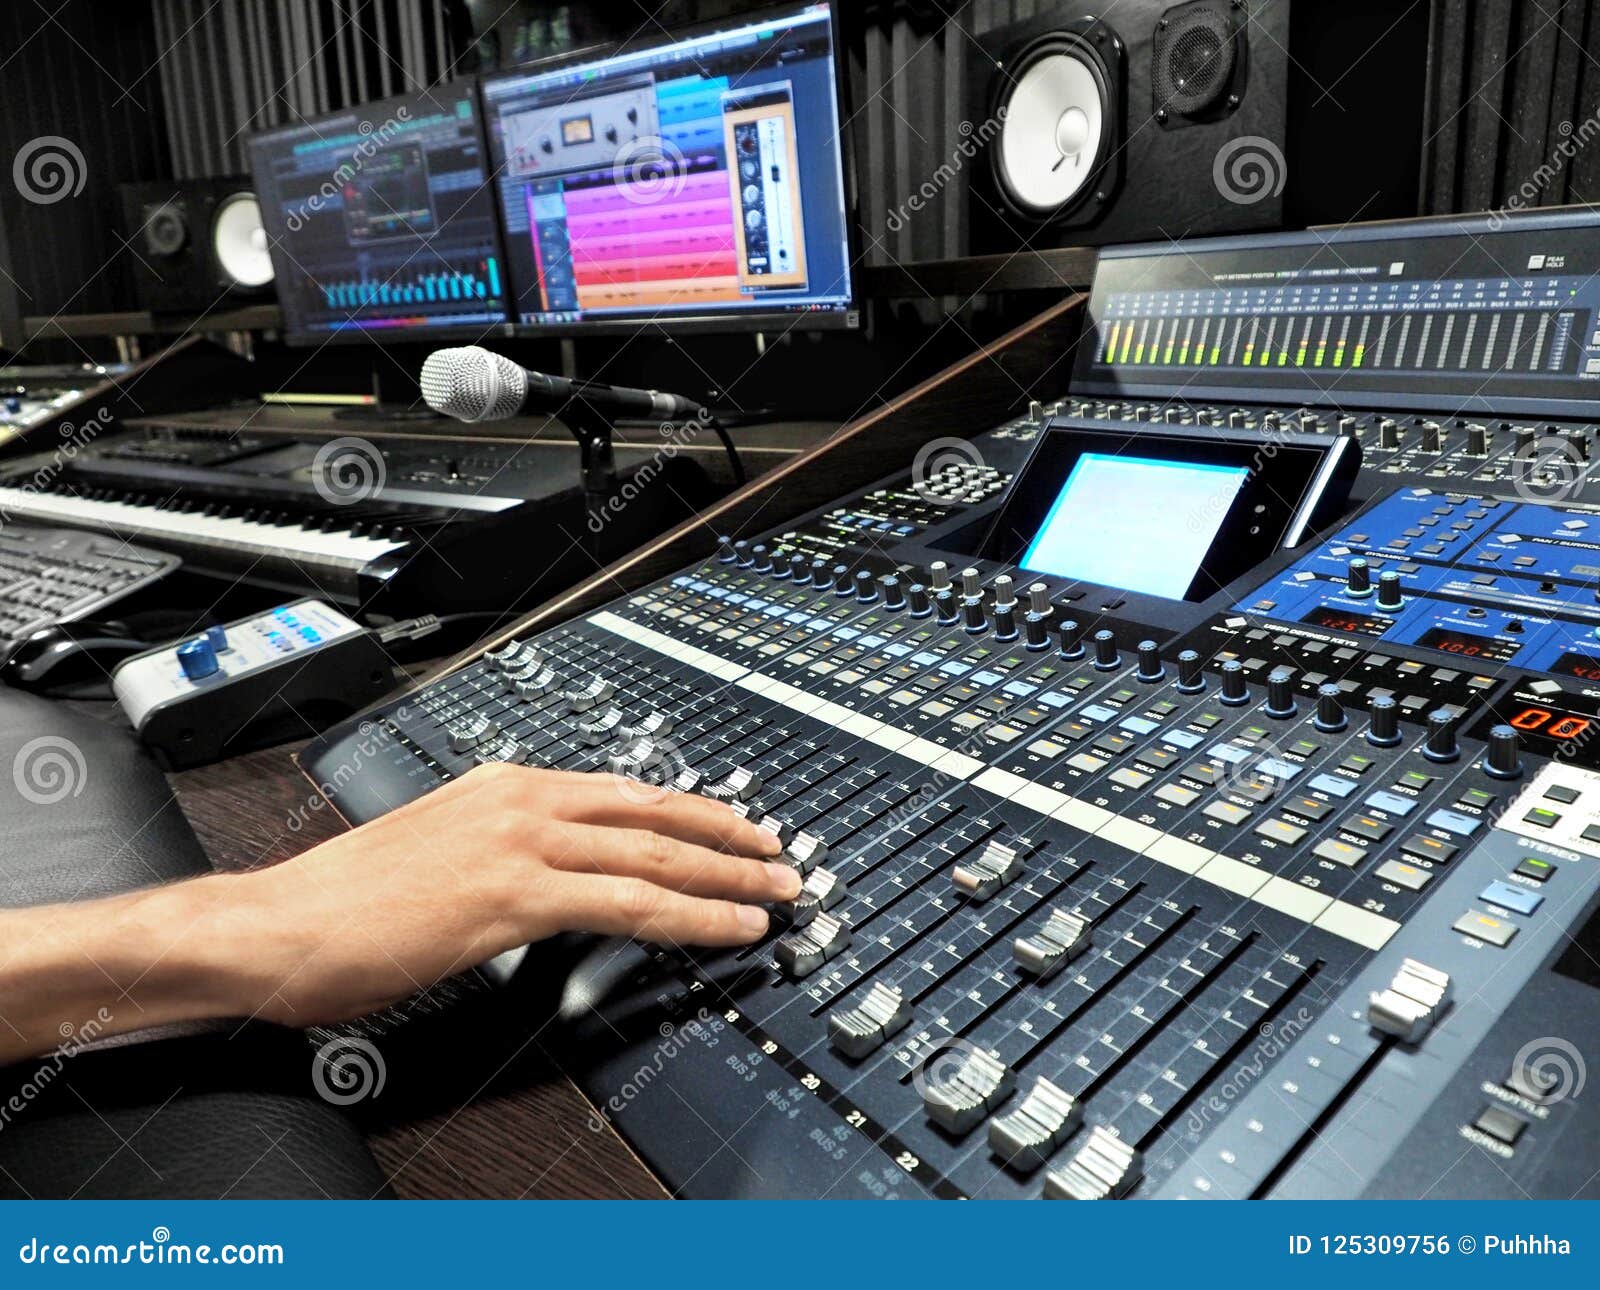 sound recording studio with music recording equipment